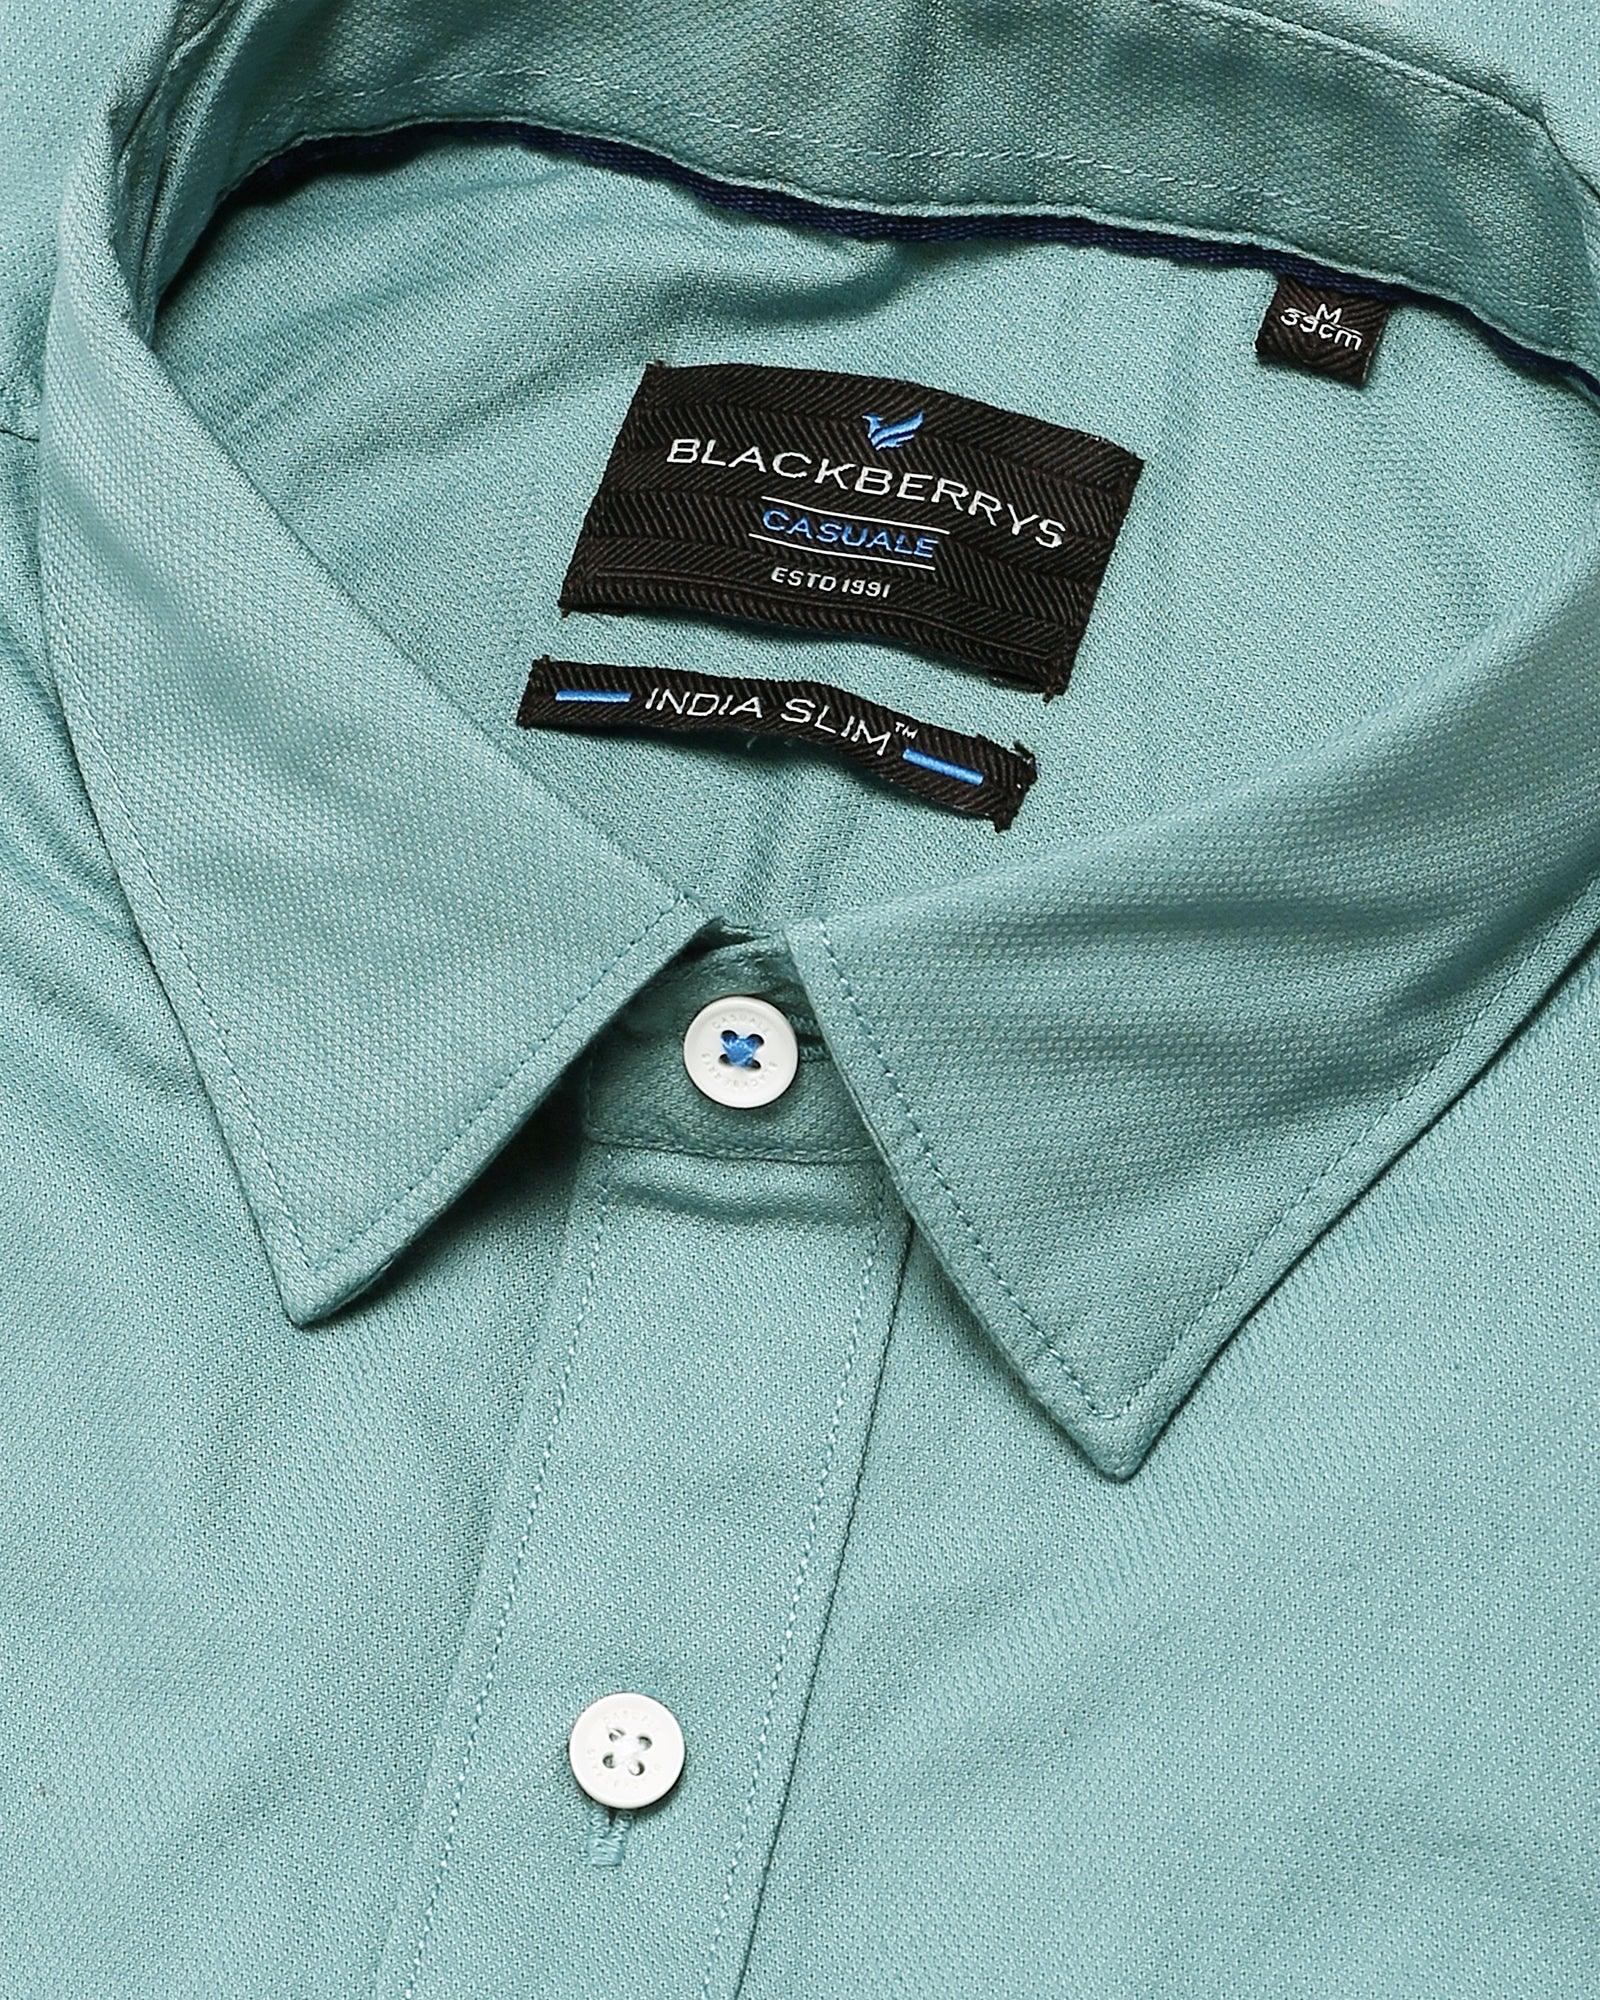 Formal Half Sleeve Teal Solid Shirt - Canberra